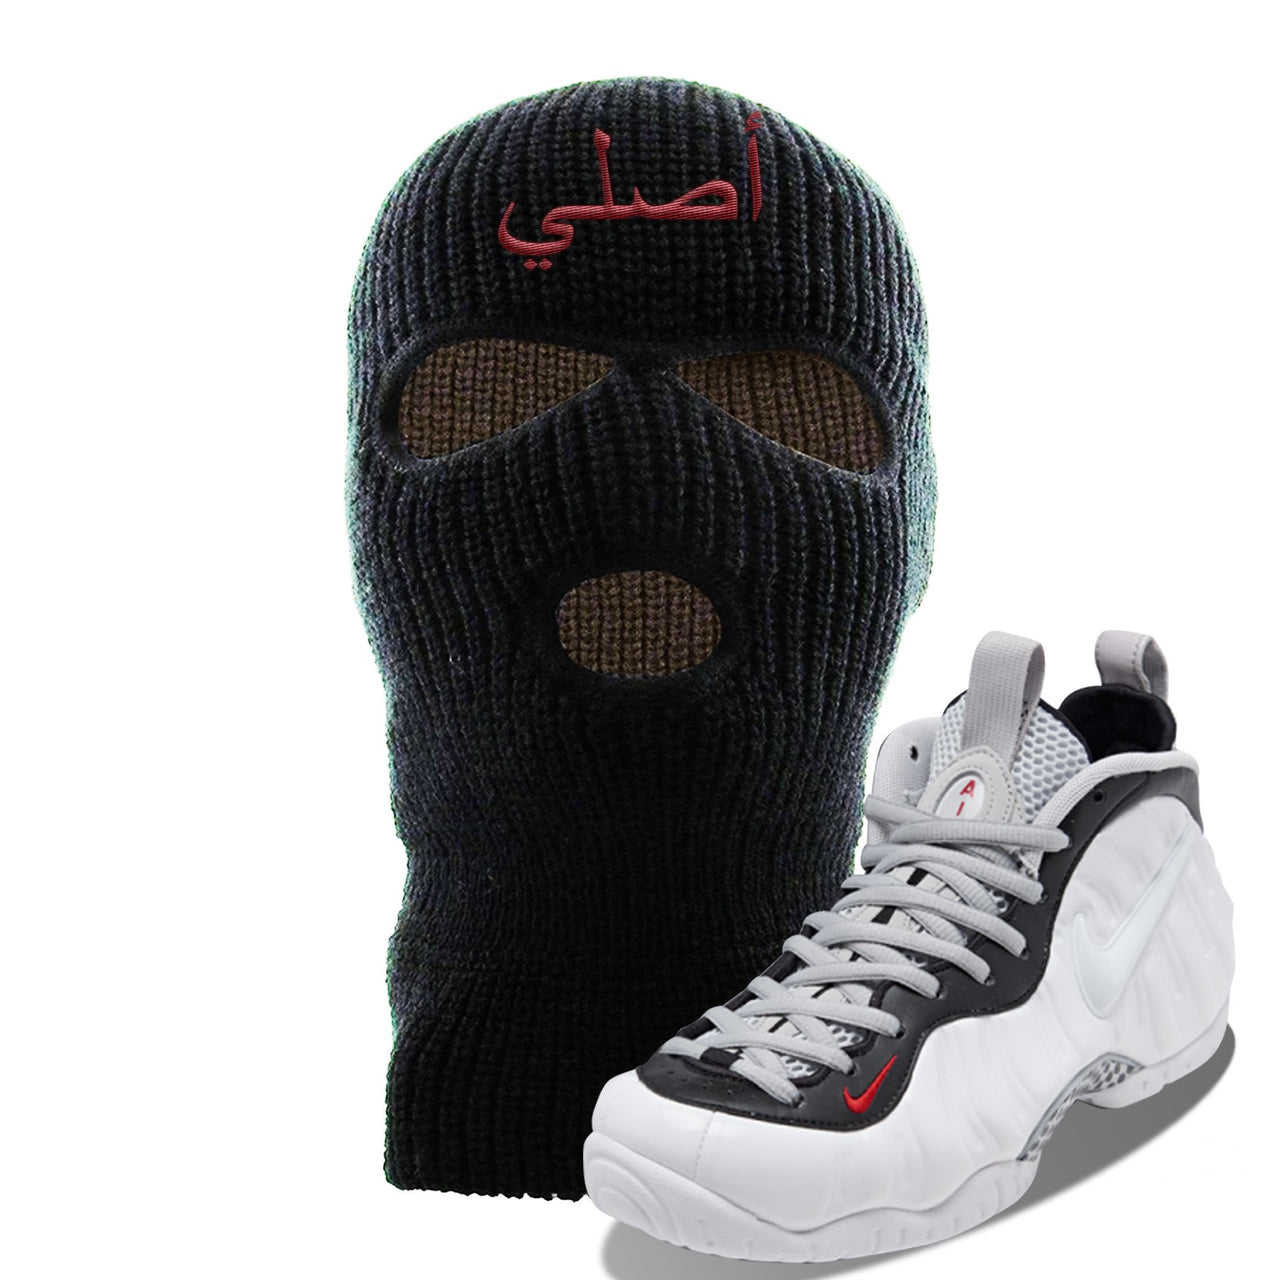 Foamposite Pro White Black University Red Sneaker Black Ski Mask | Winter Mask to match Nike Air Foamposite Pro White Black University Red Shoes | Original Arabic